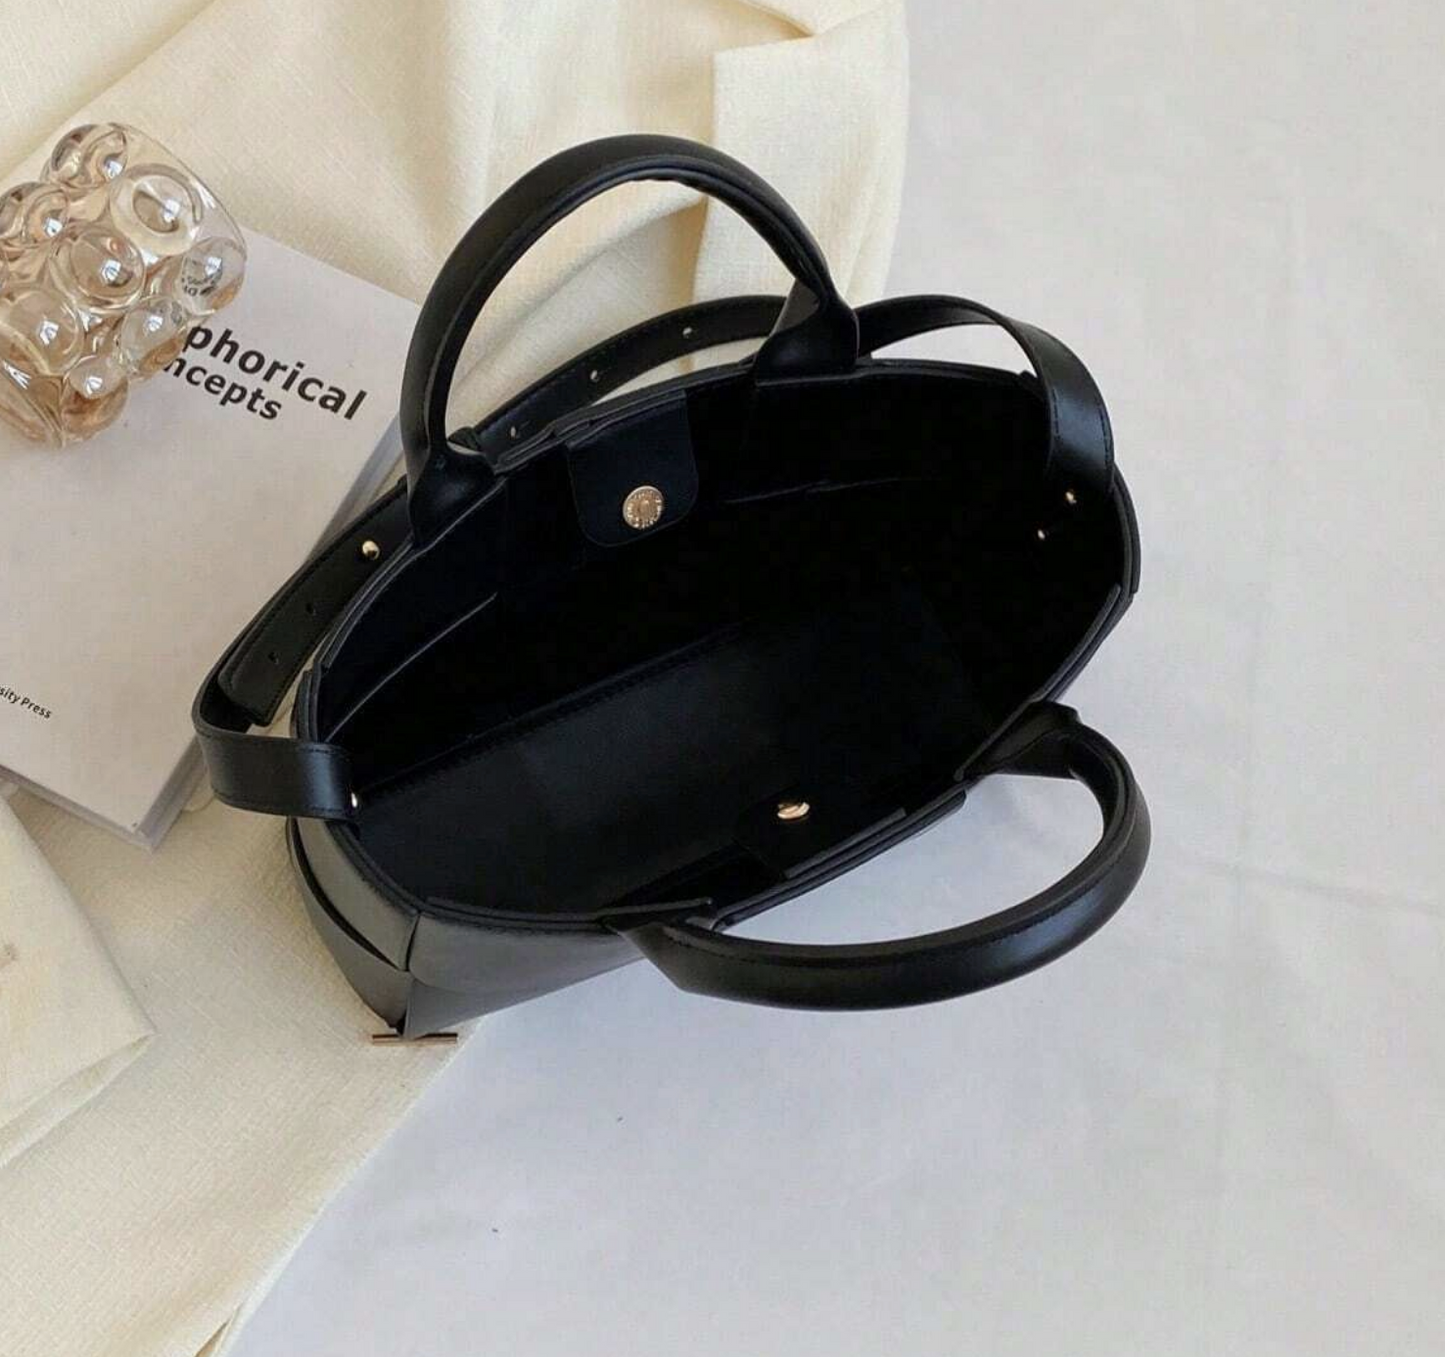 Woven Satchel Crossbody Bag, Minimalist PU Leather Adjustable Strap Bags, Large Capacity Shoulder Purse